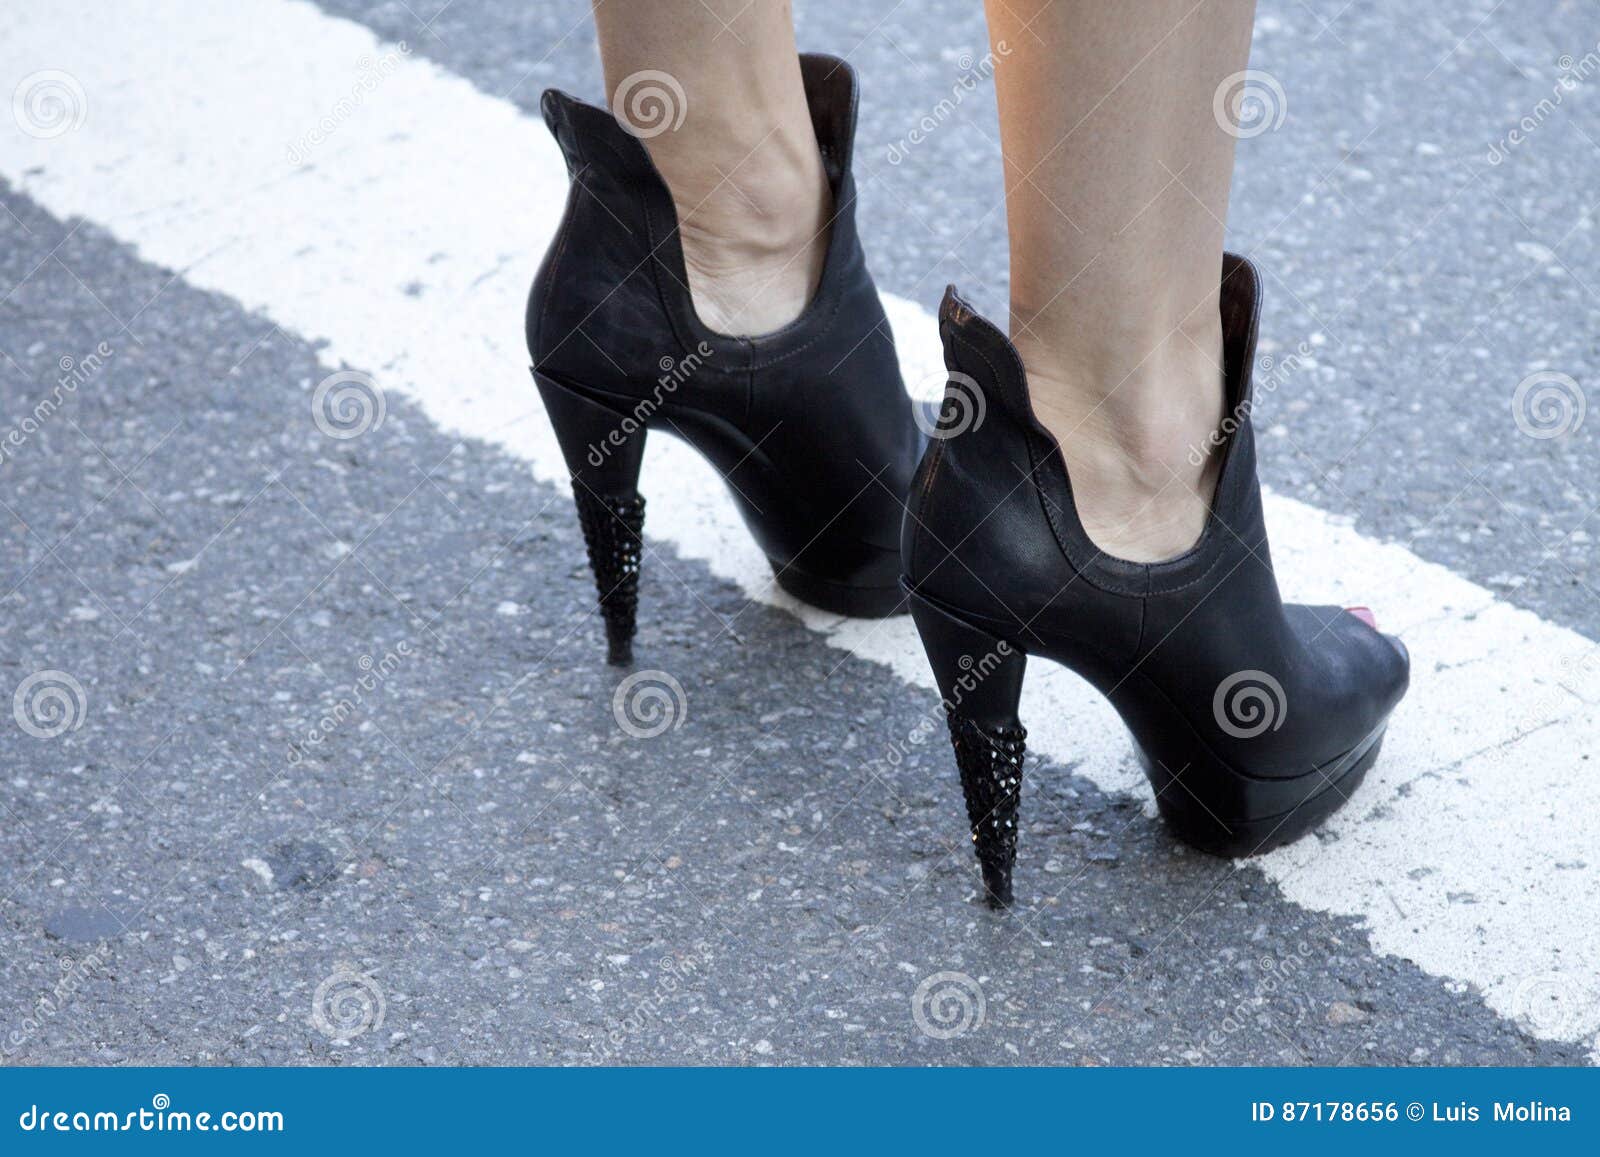 a woman showing her high heel booties